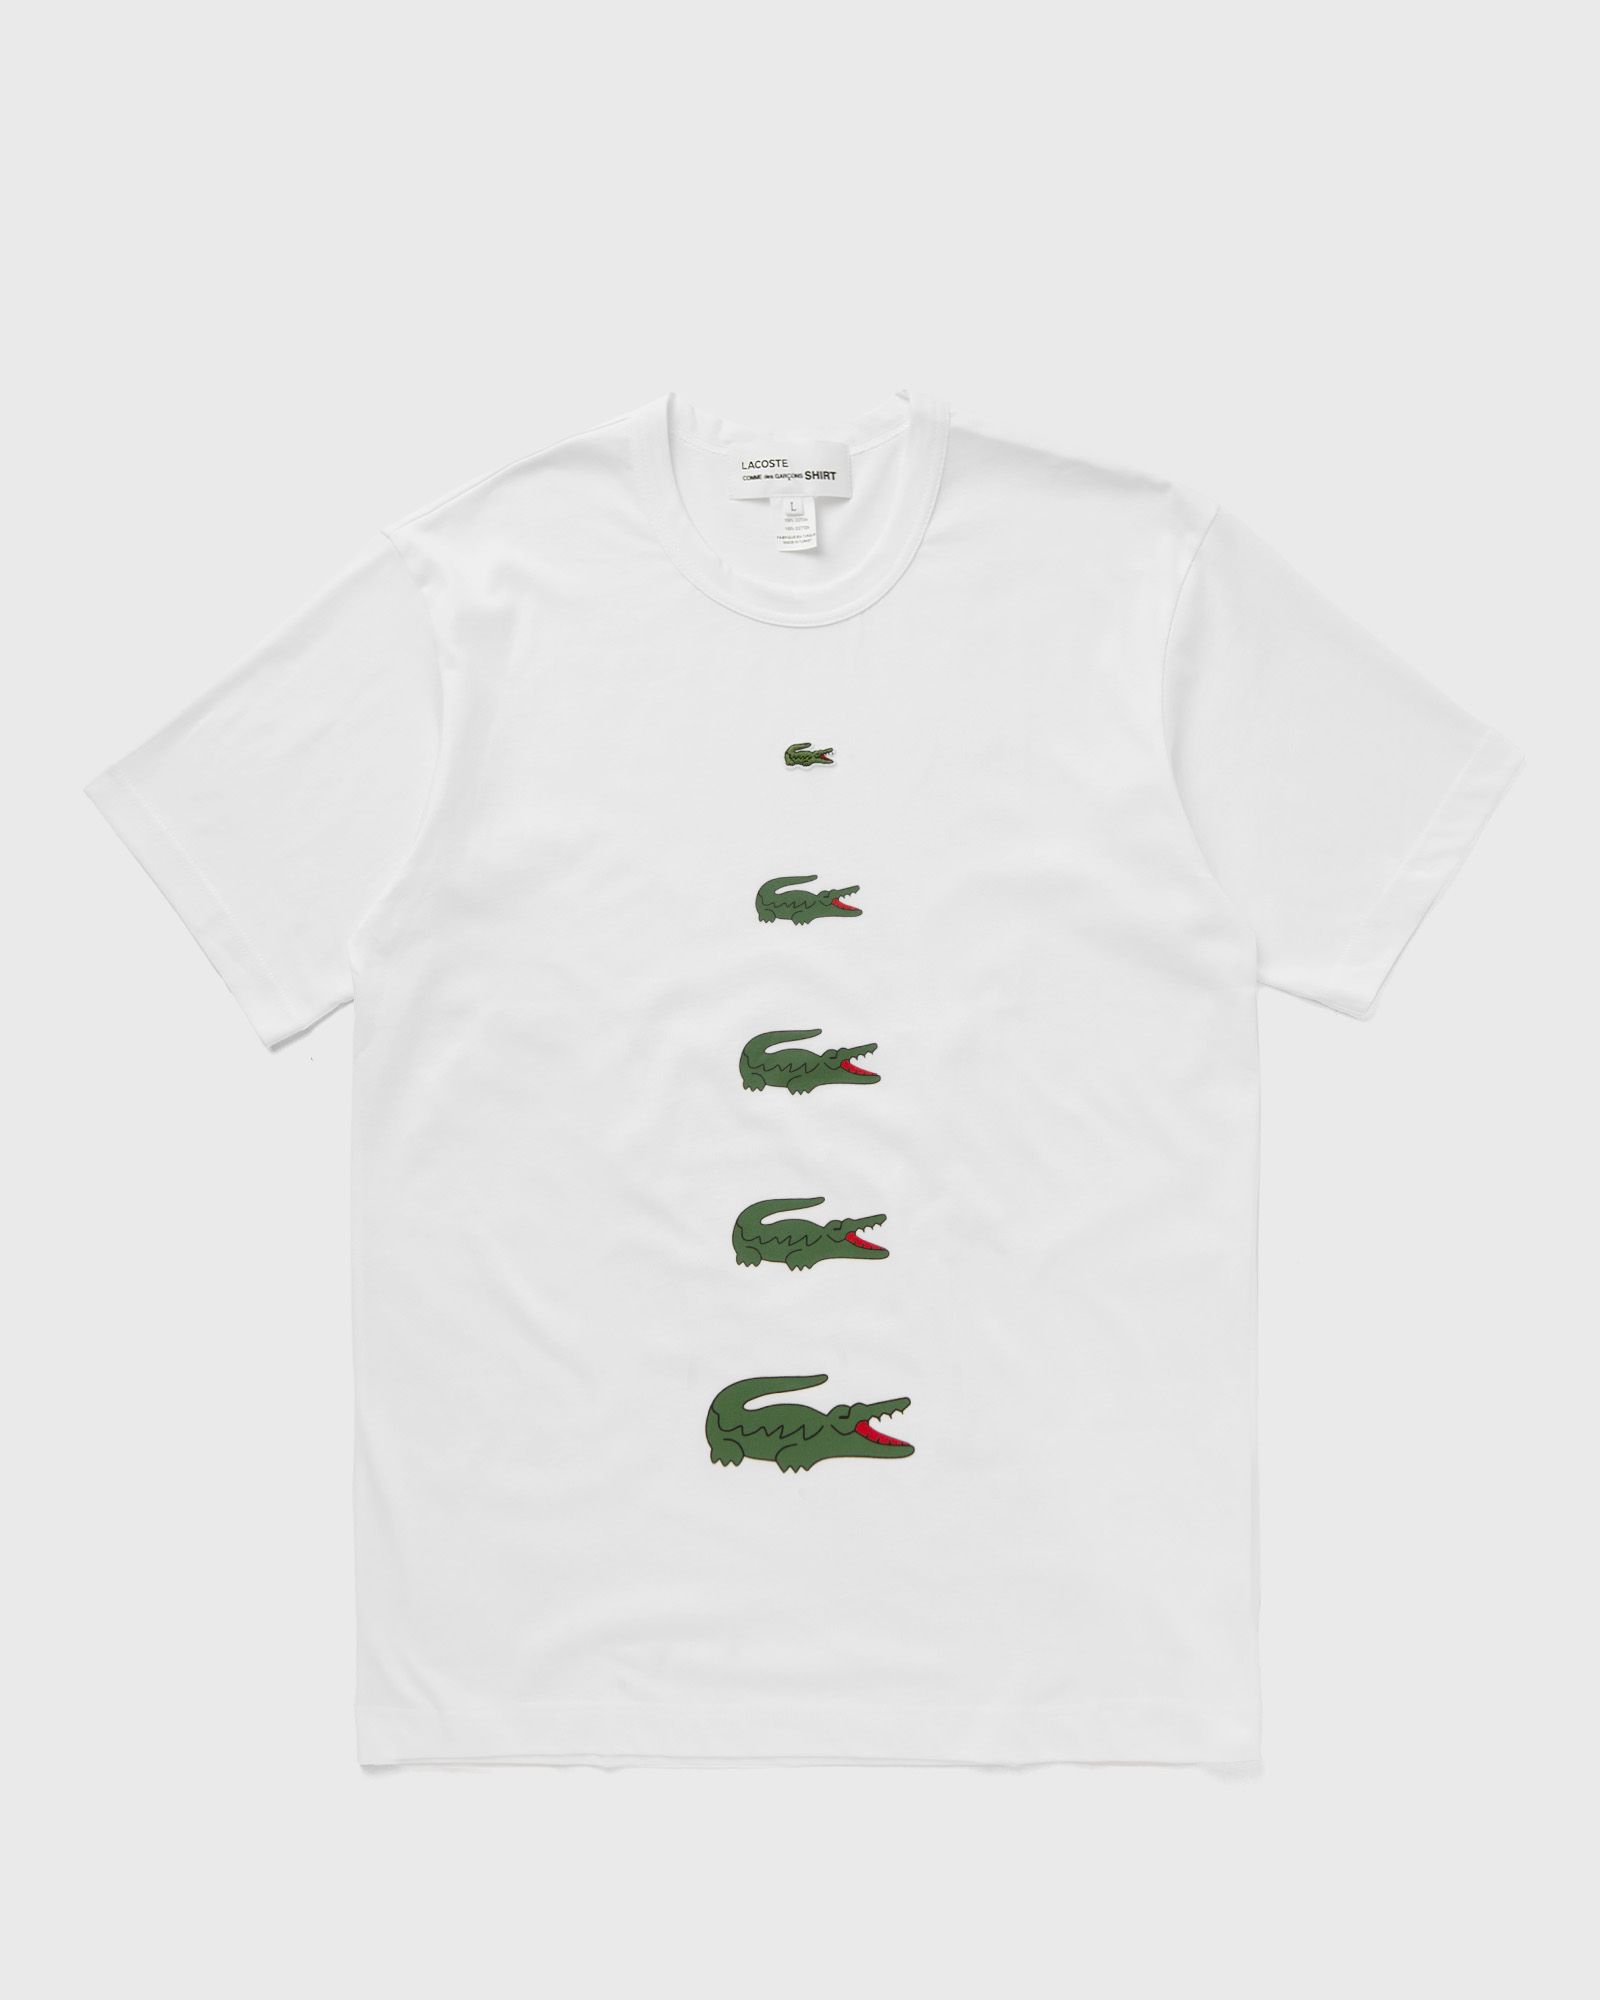 Comme des Garçons Shirt - x lacoste knit tee men shortsleeves green|white in größe:l